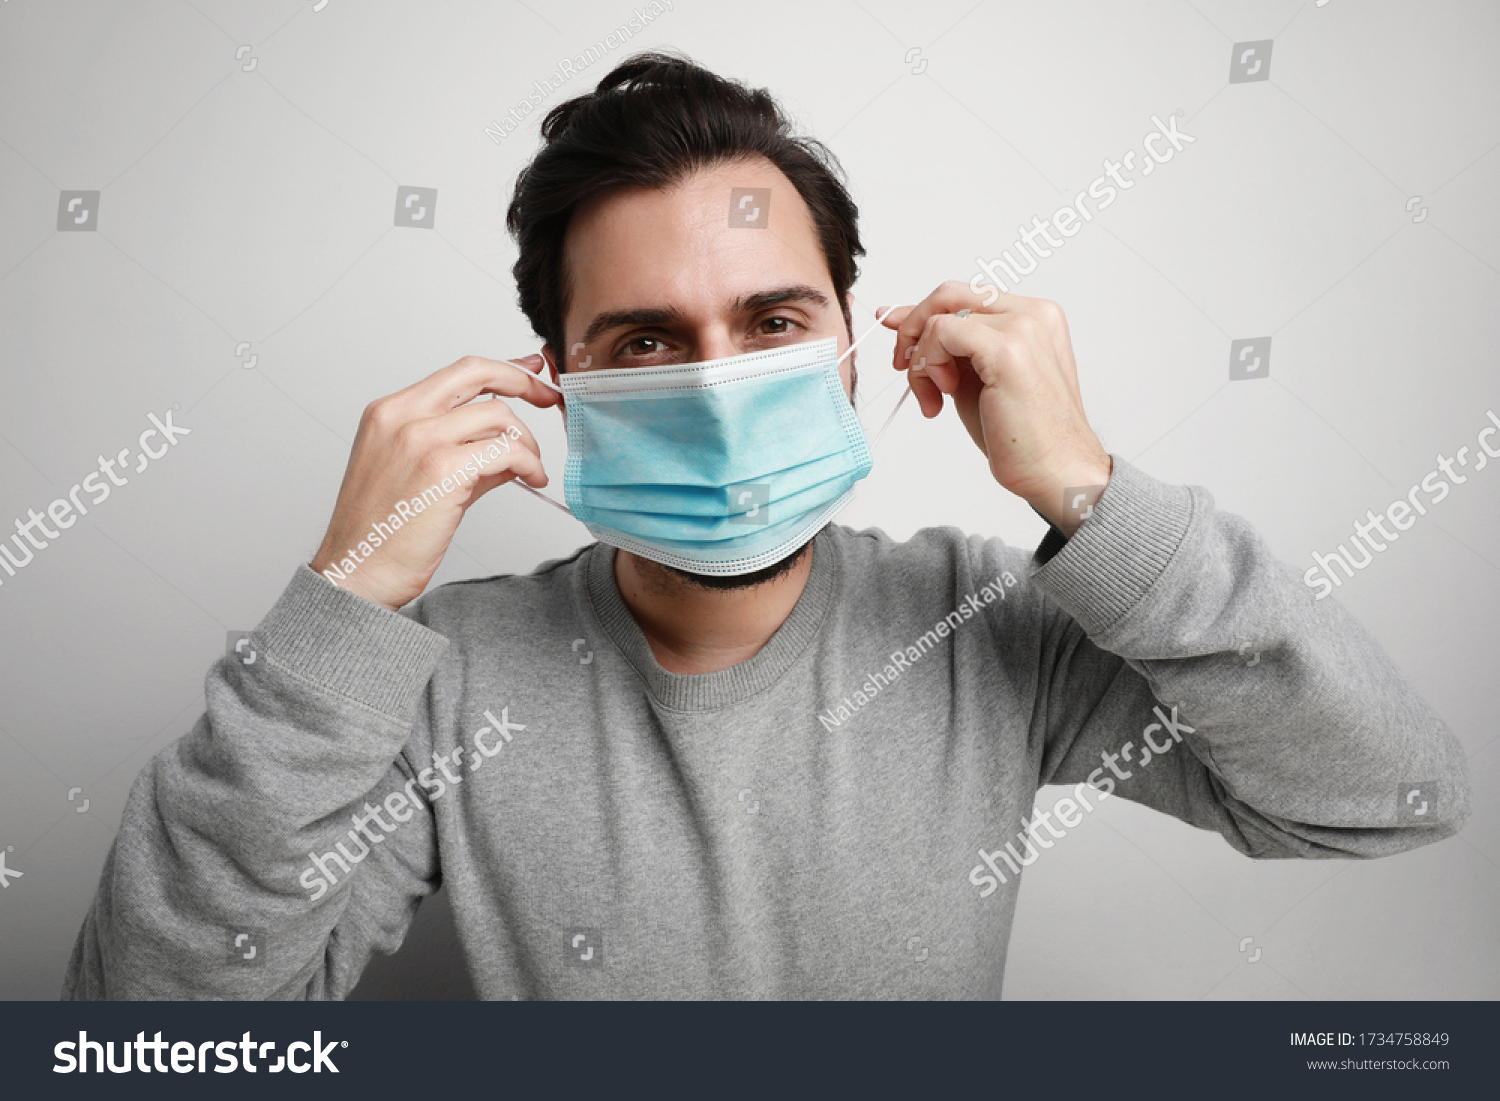 Headshot of young man using medical virus mask protection of coronavirus. Worldwide pandemic situation. #1734758849